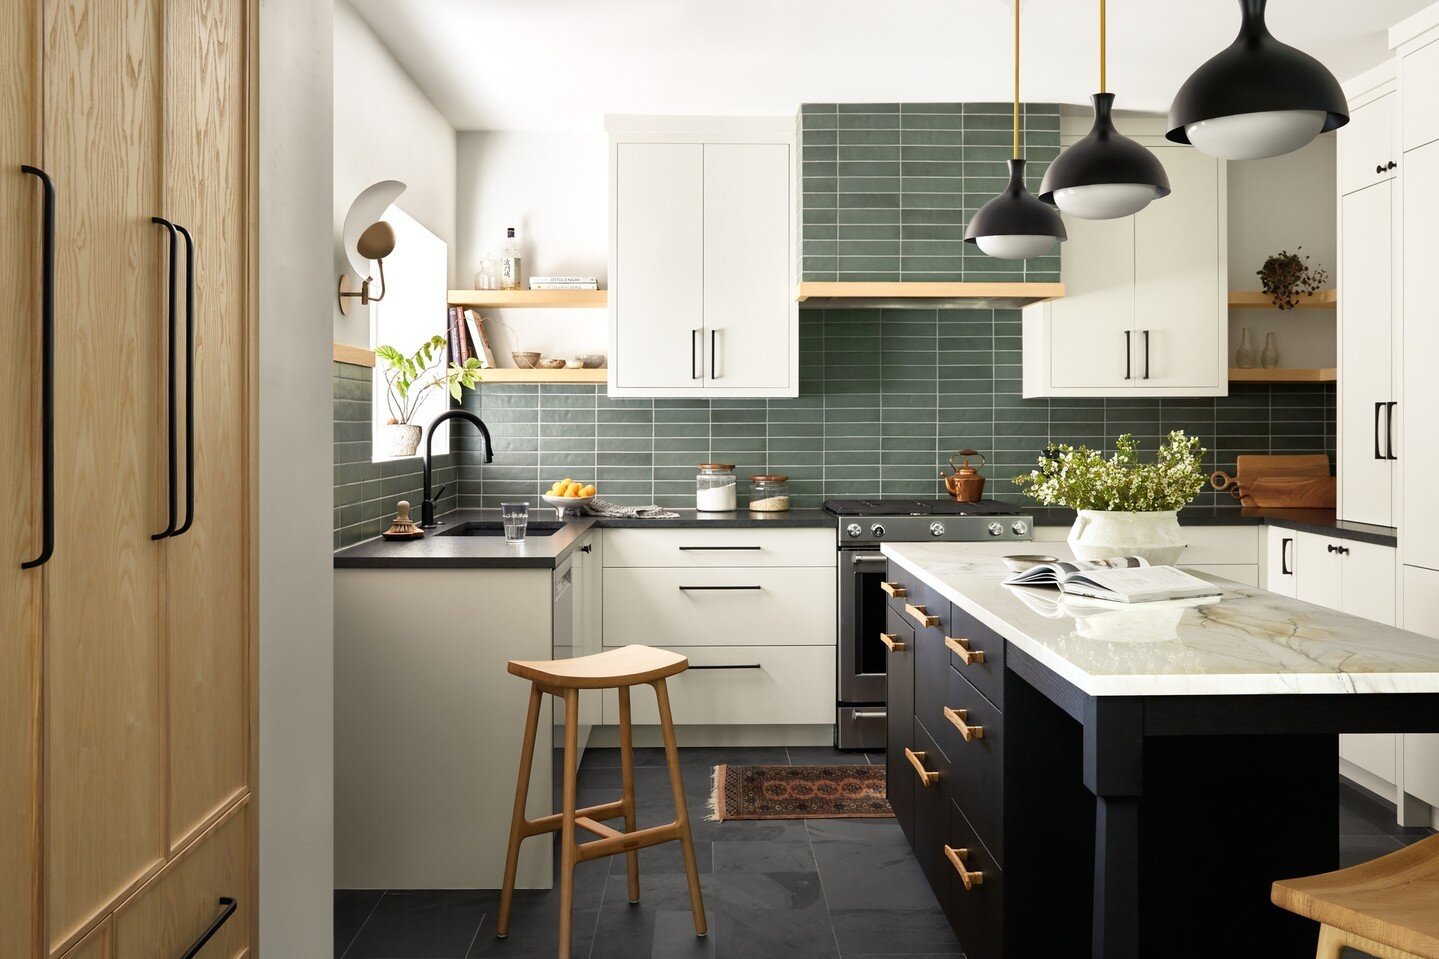 #Kitchengoals⁠
⁠
Design: @vestigehome⁠
Styling: @kristihunter